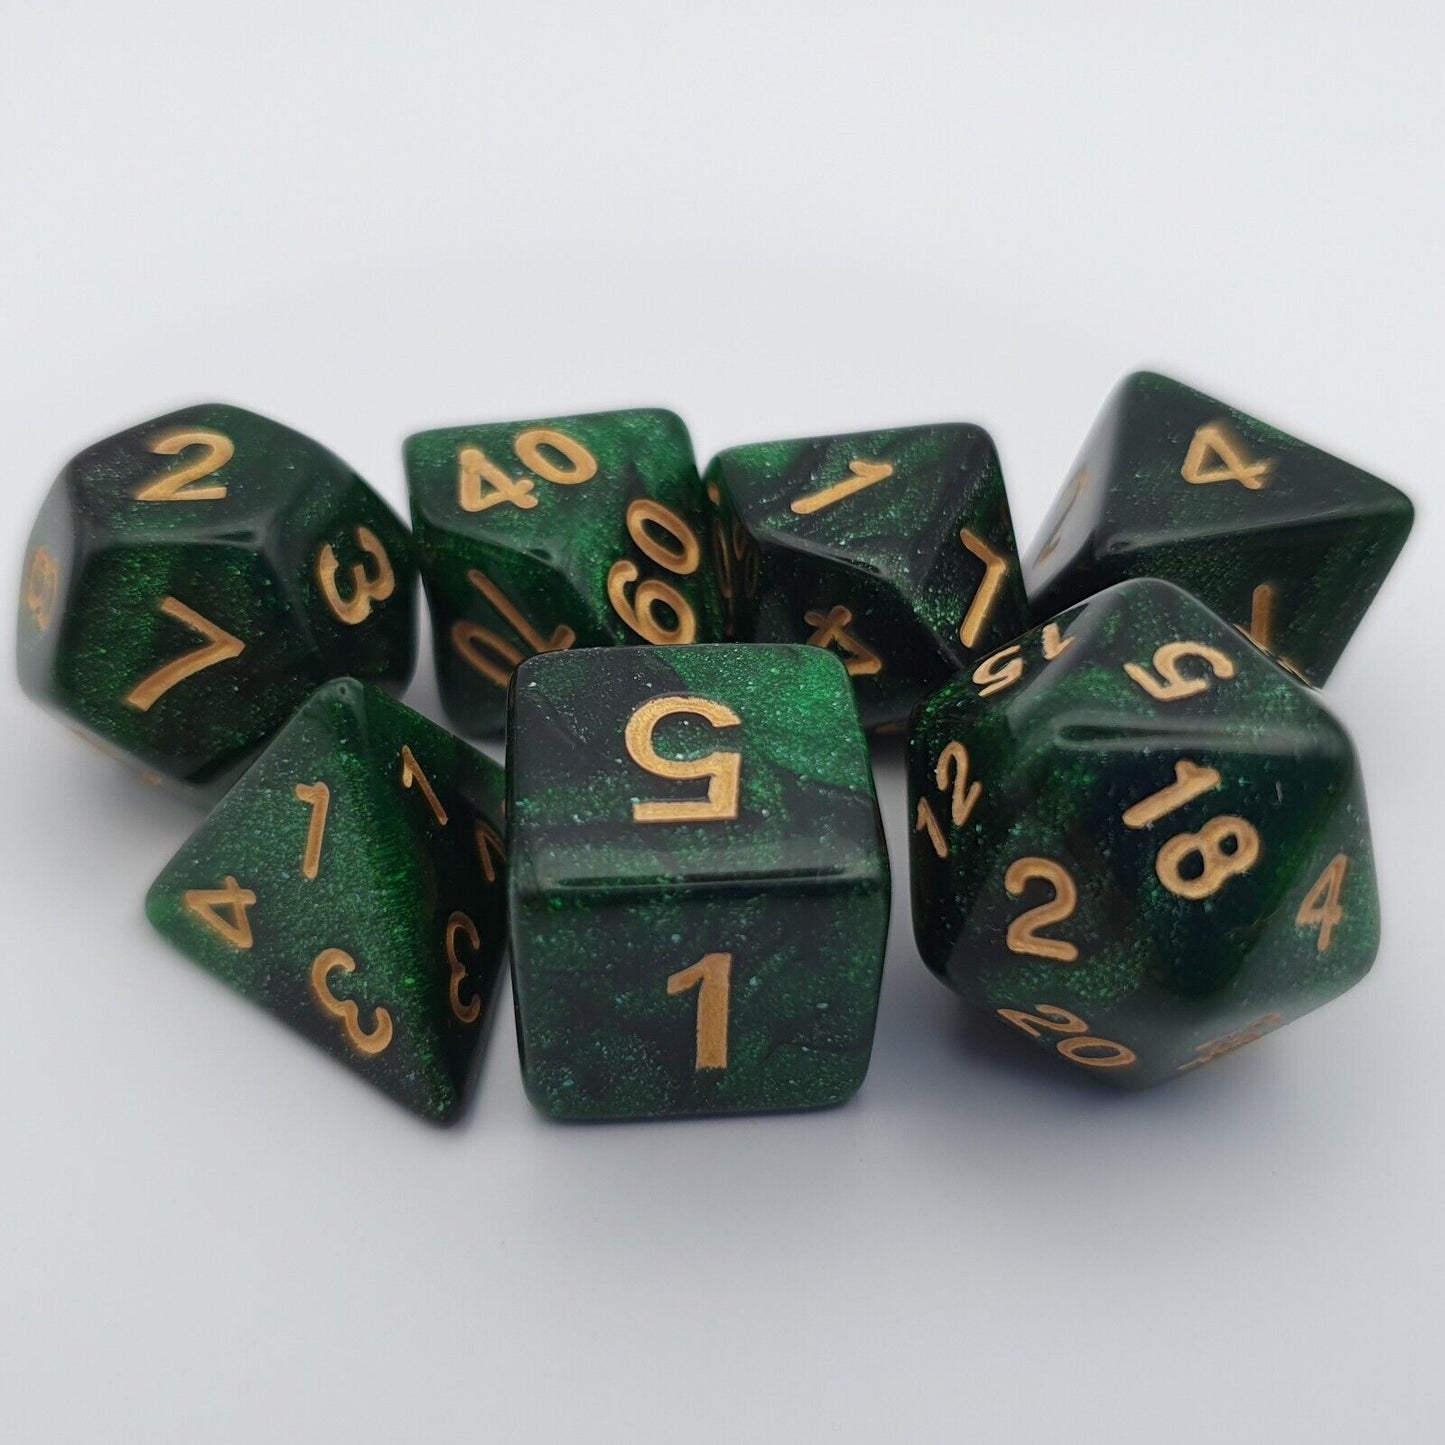 Green galaxy dice